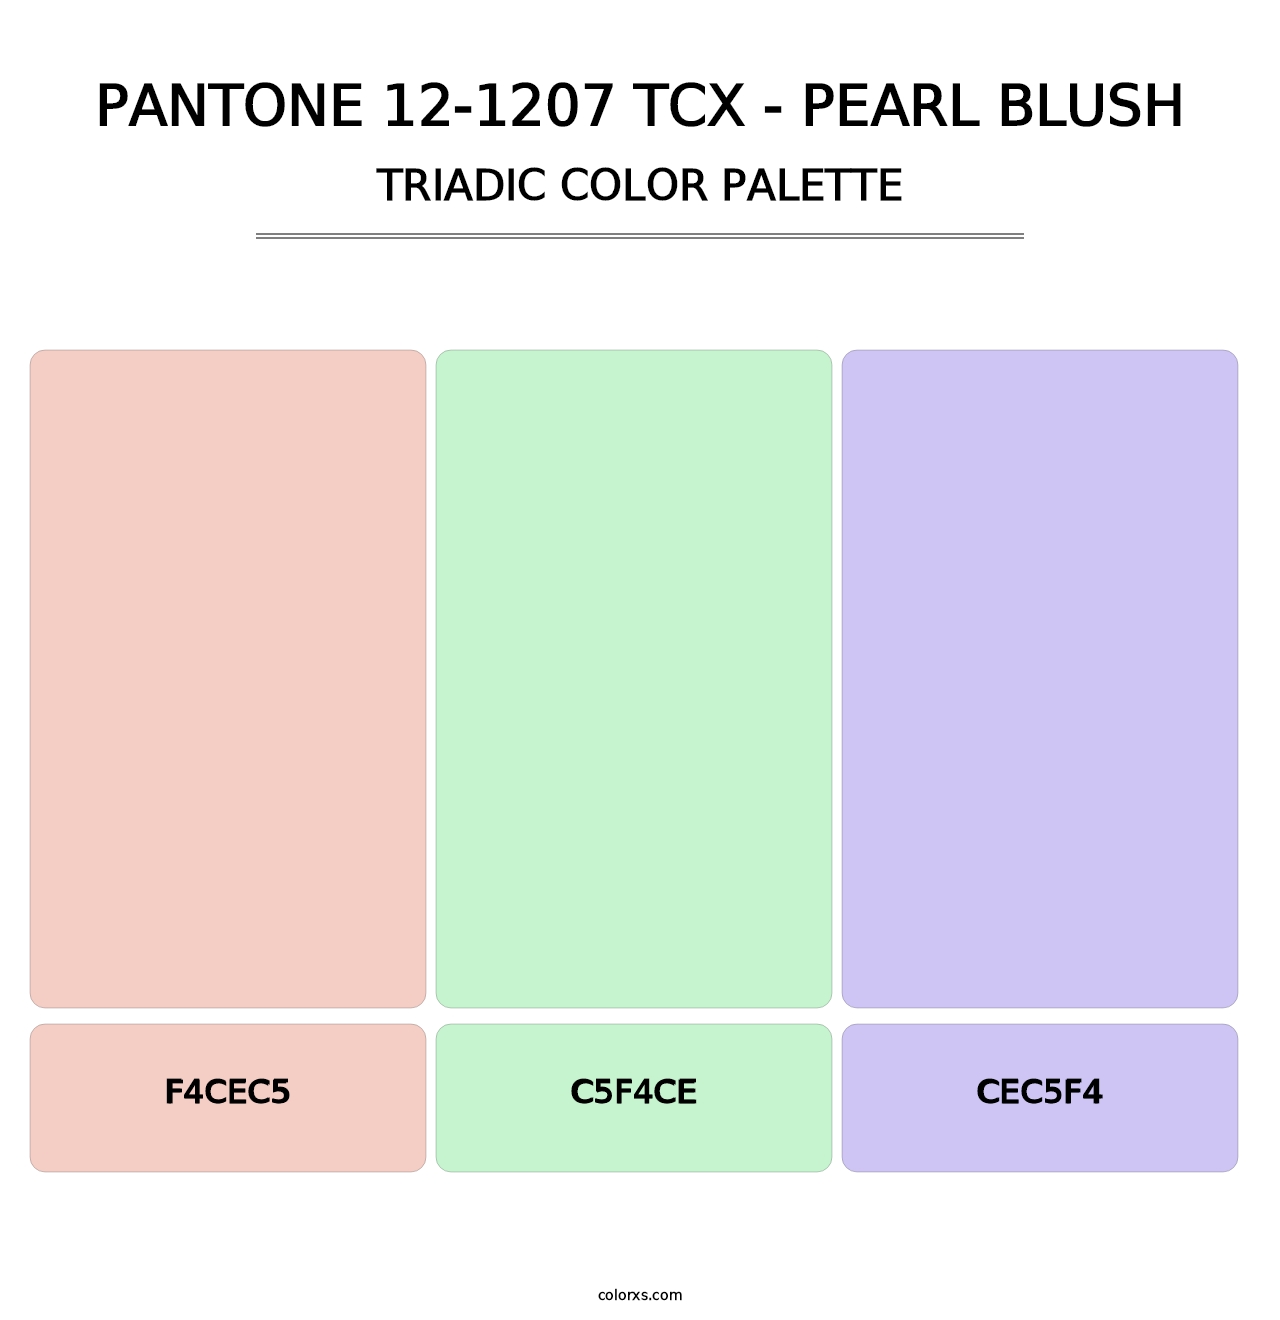 PANTONE 12-1207 TCX - Pearl Blush - Triadic Color Palette